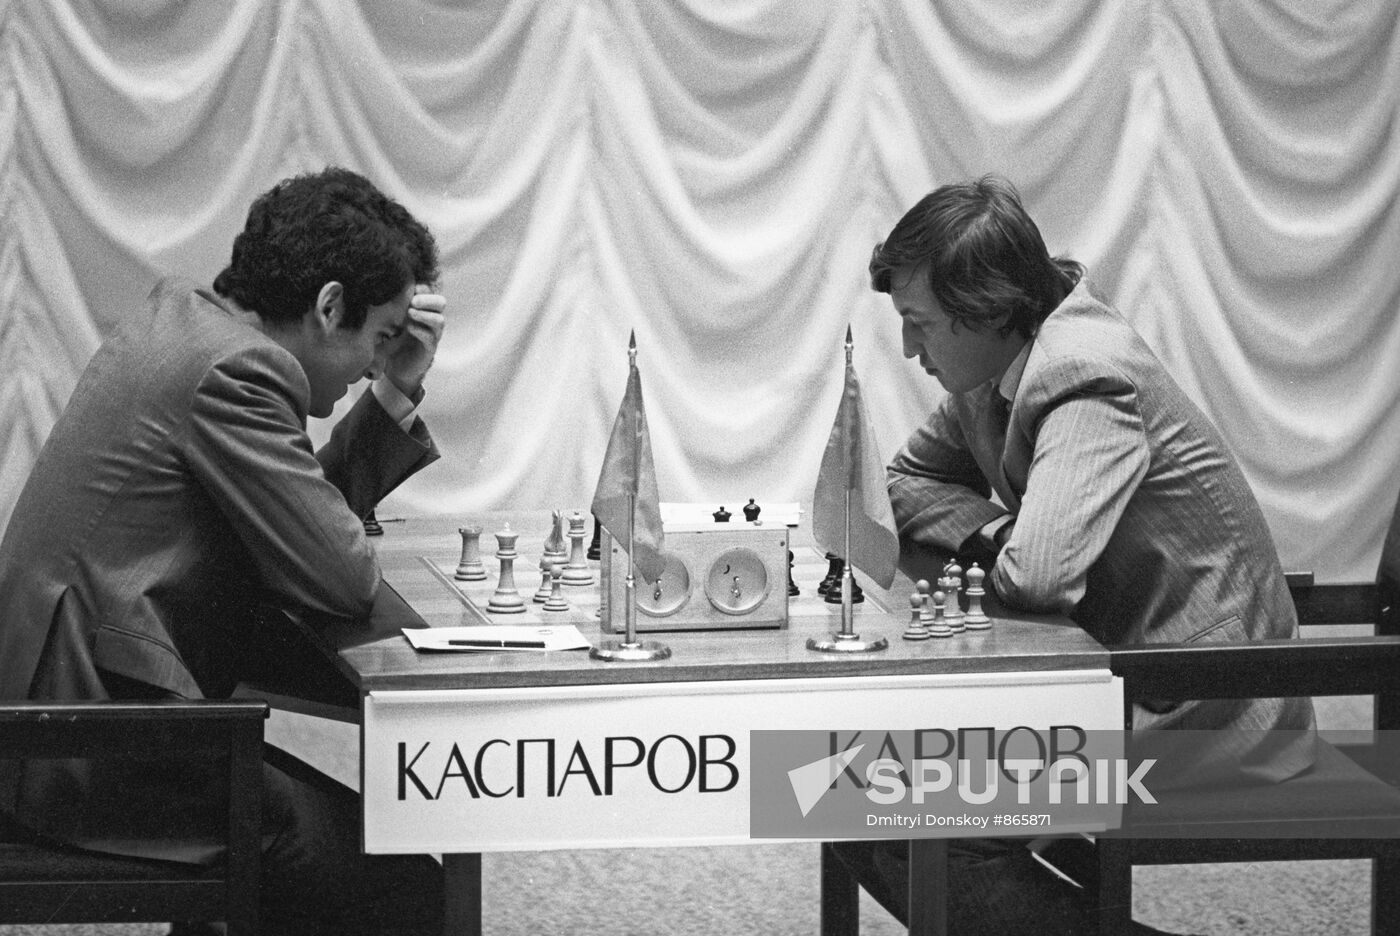 Anatoly Karpov and Garry Kasparov